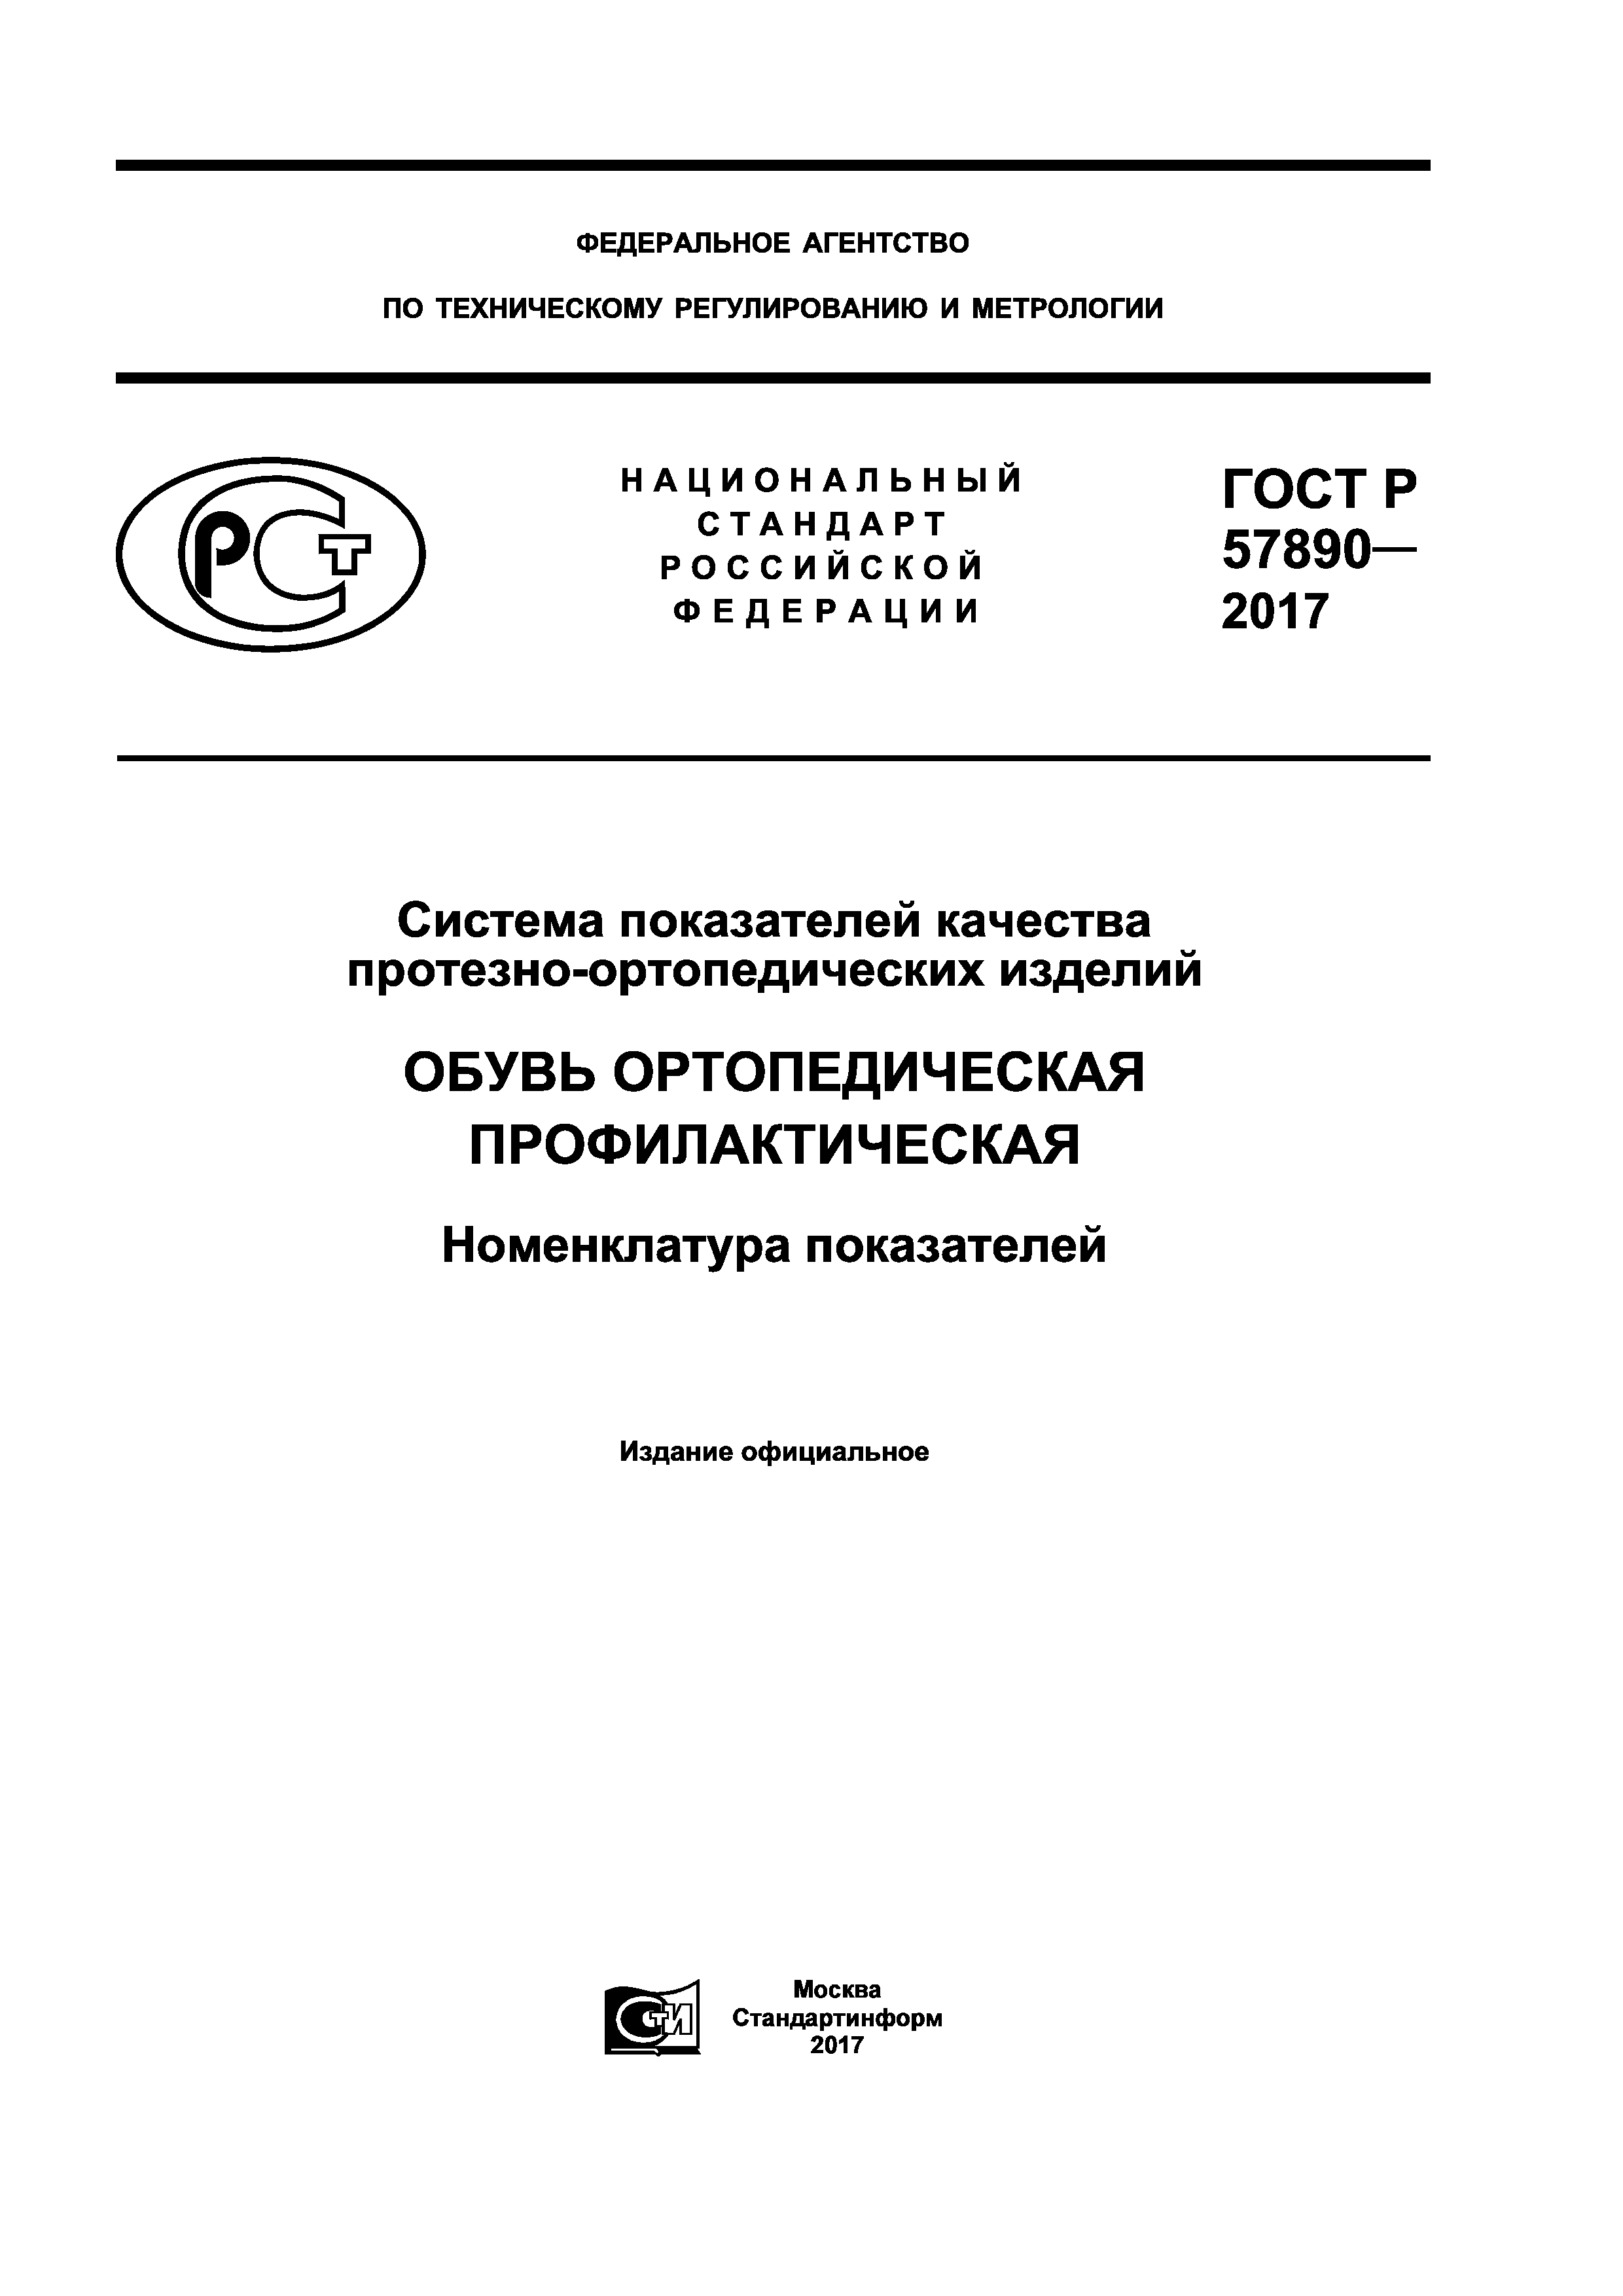 ГОСТ Р 57890-2017